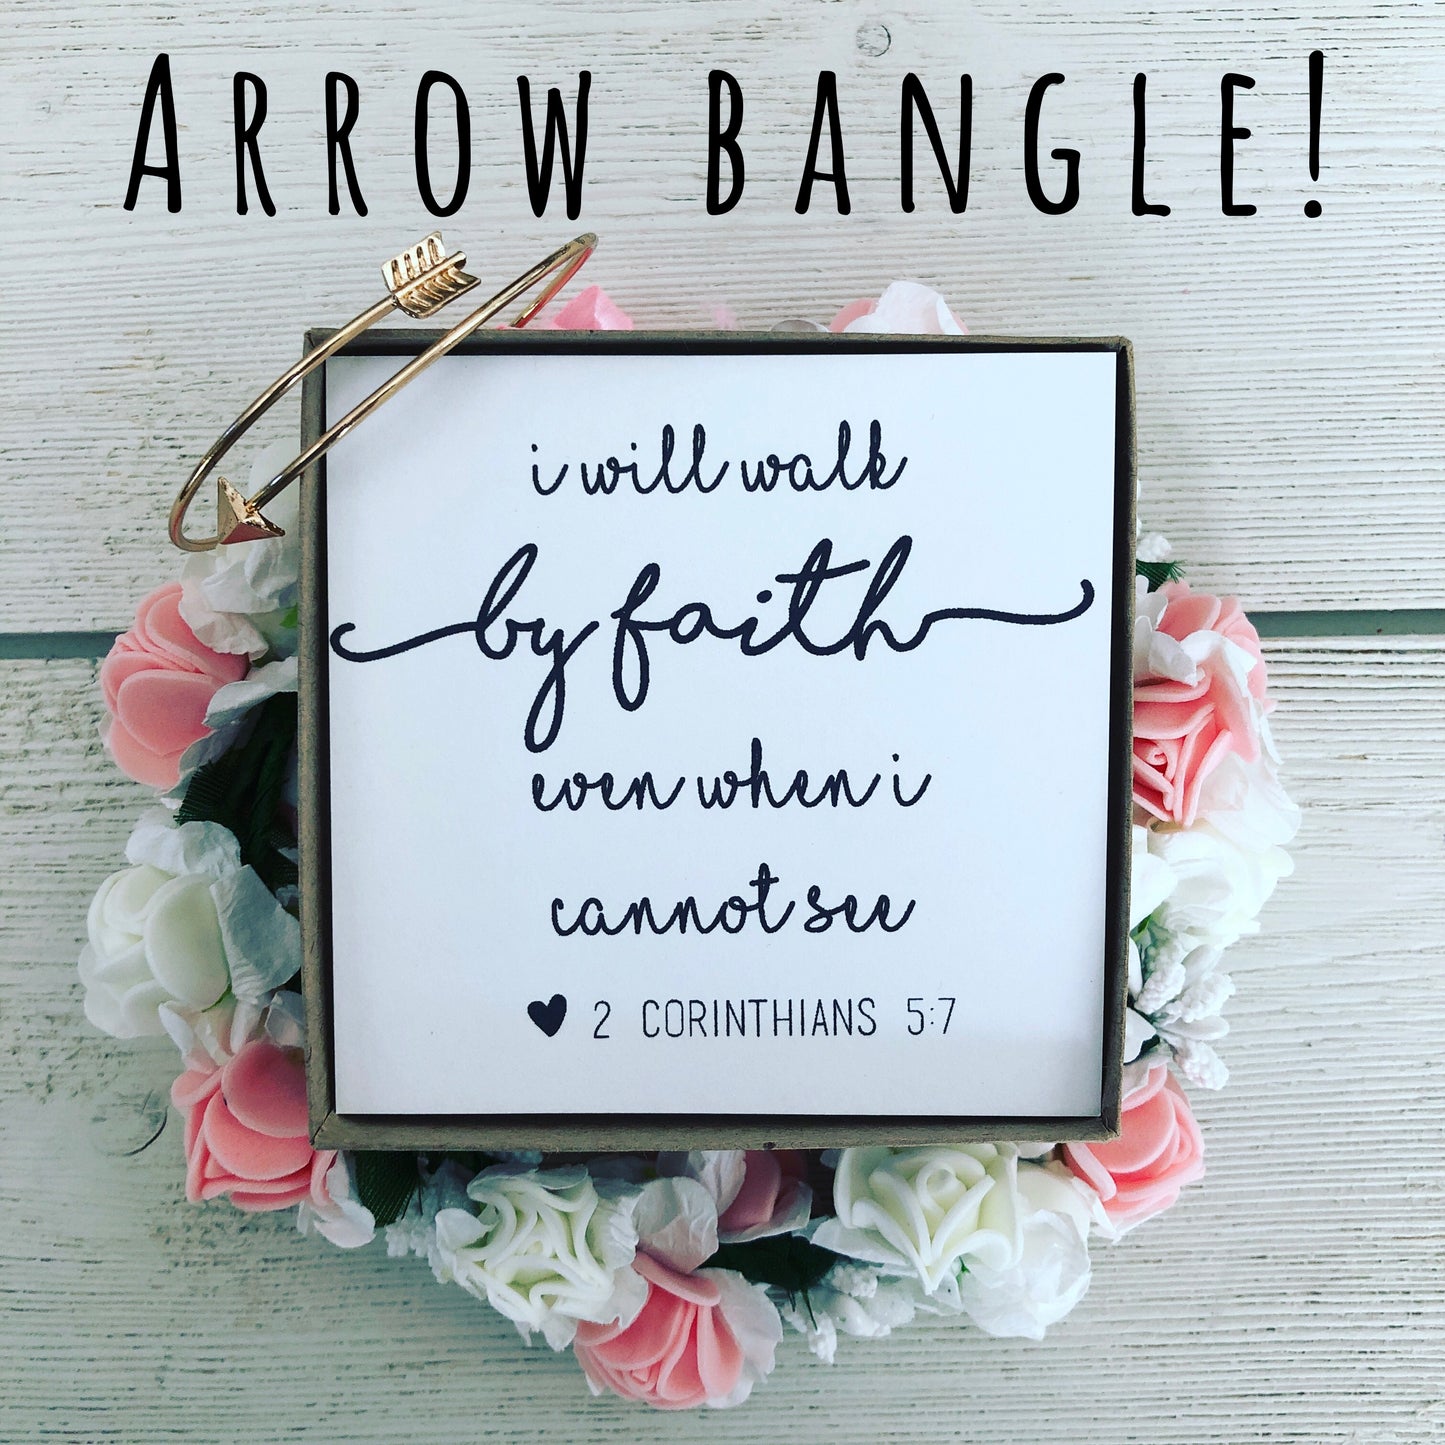 Bible Verse Arrow Bangle! Encouragement Gift